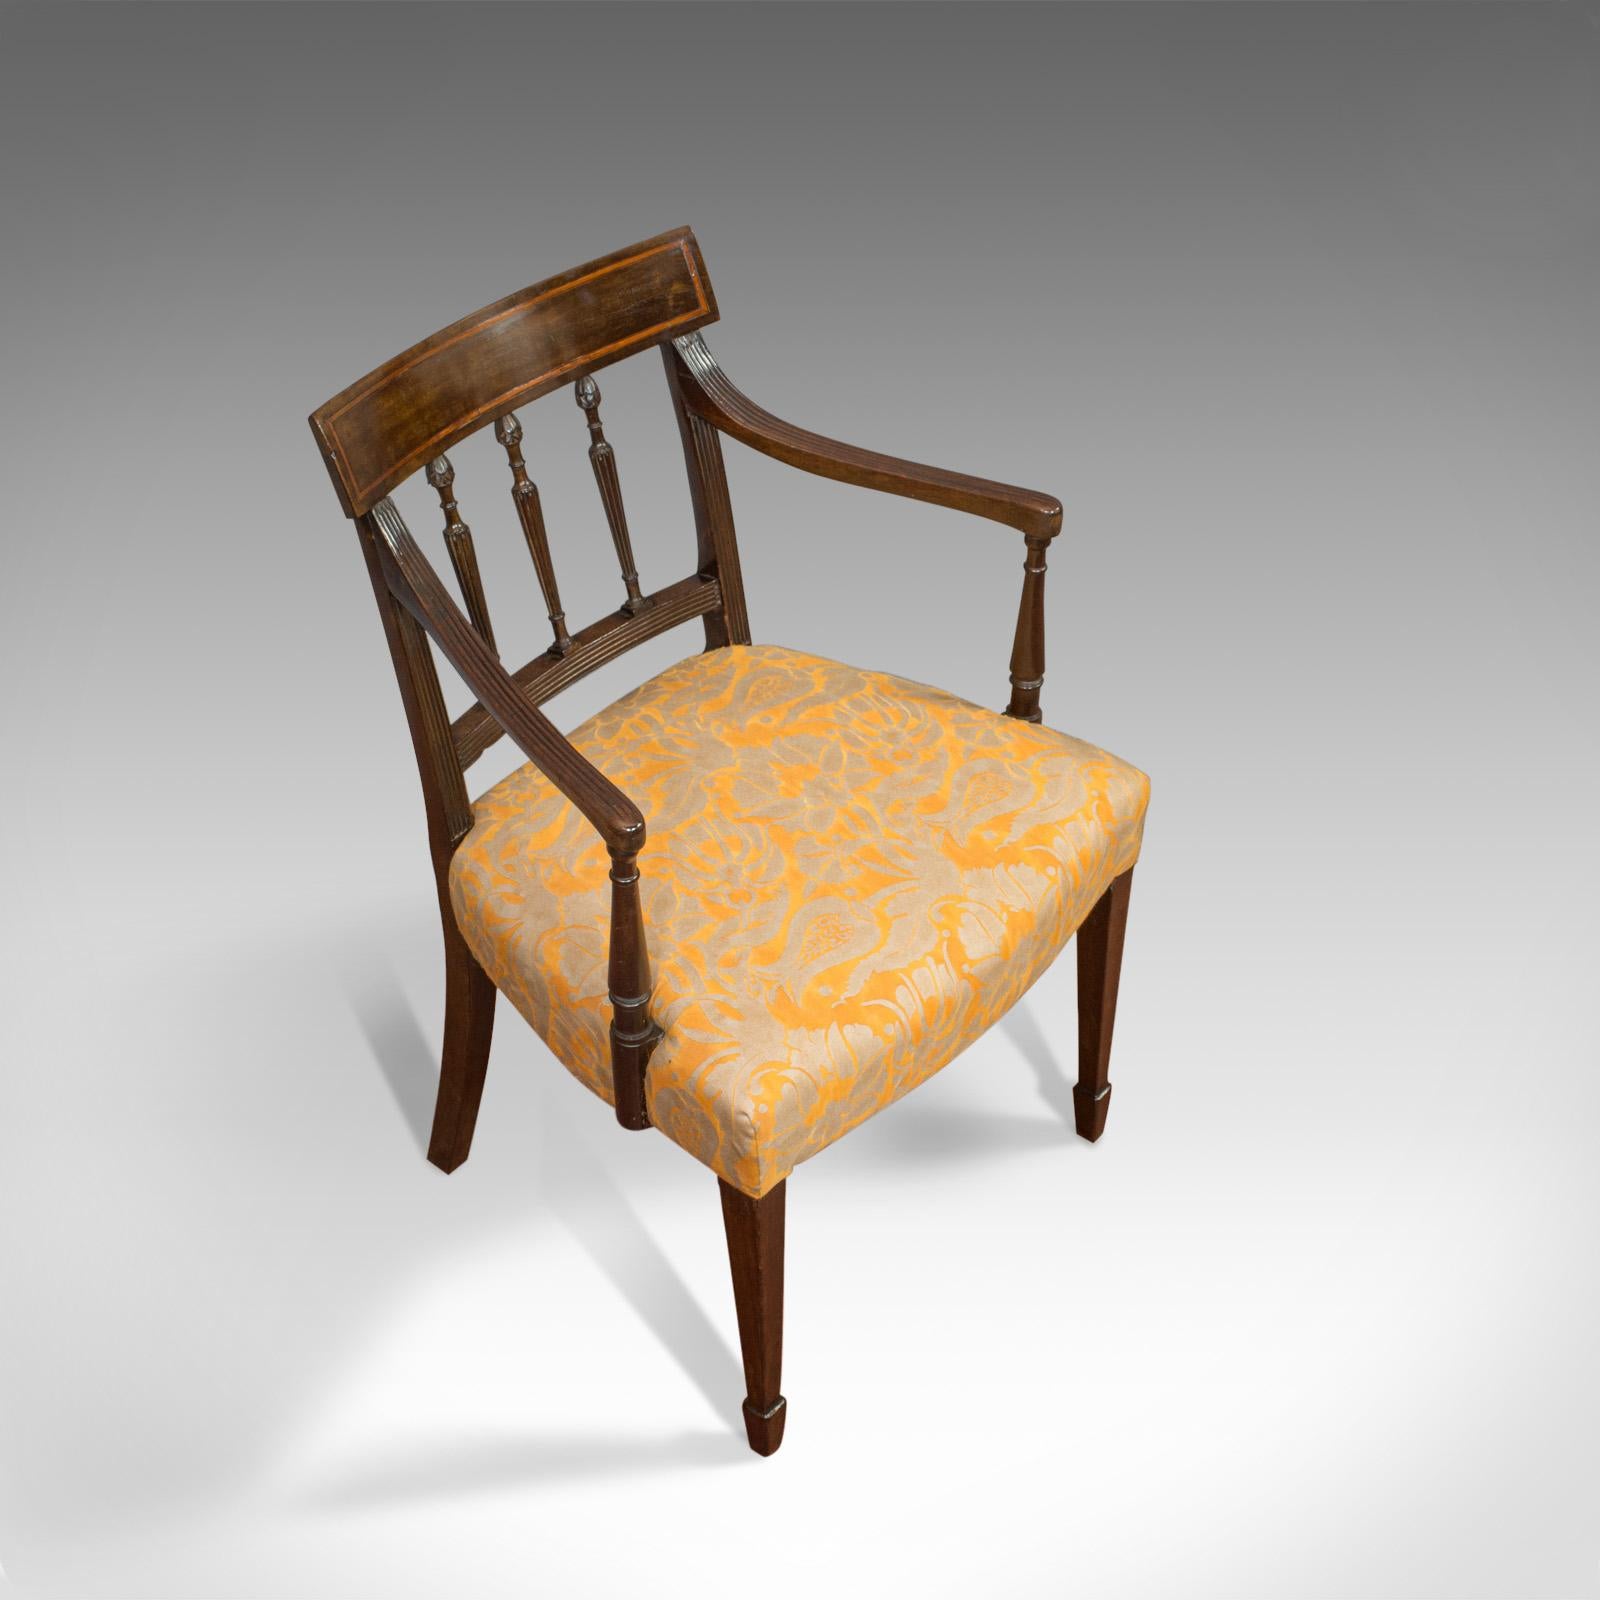 Antique Elbow Chair, English, Mahogany, Armchair, Sheraton Overtones, Regency 1